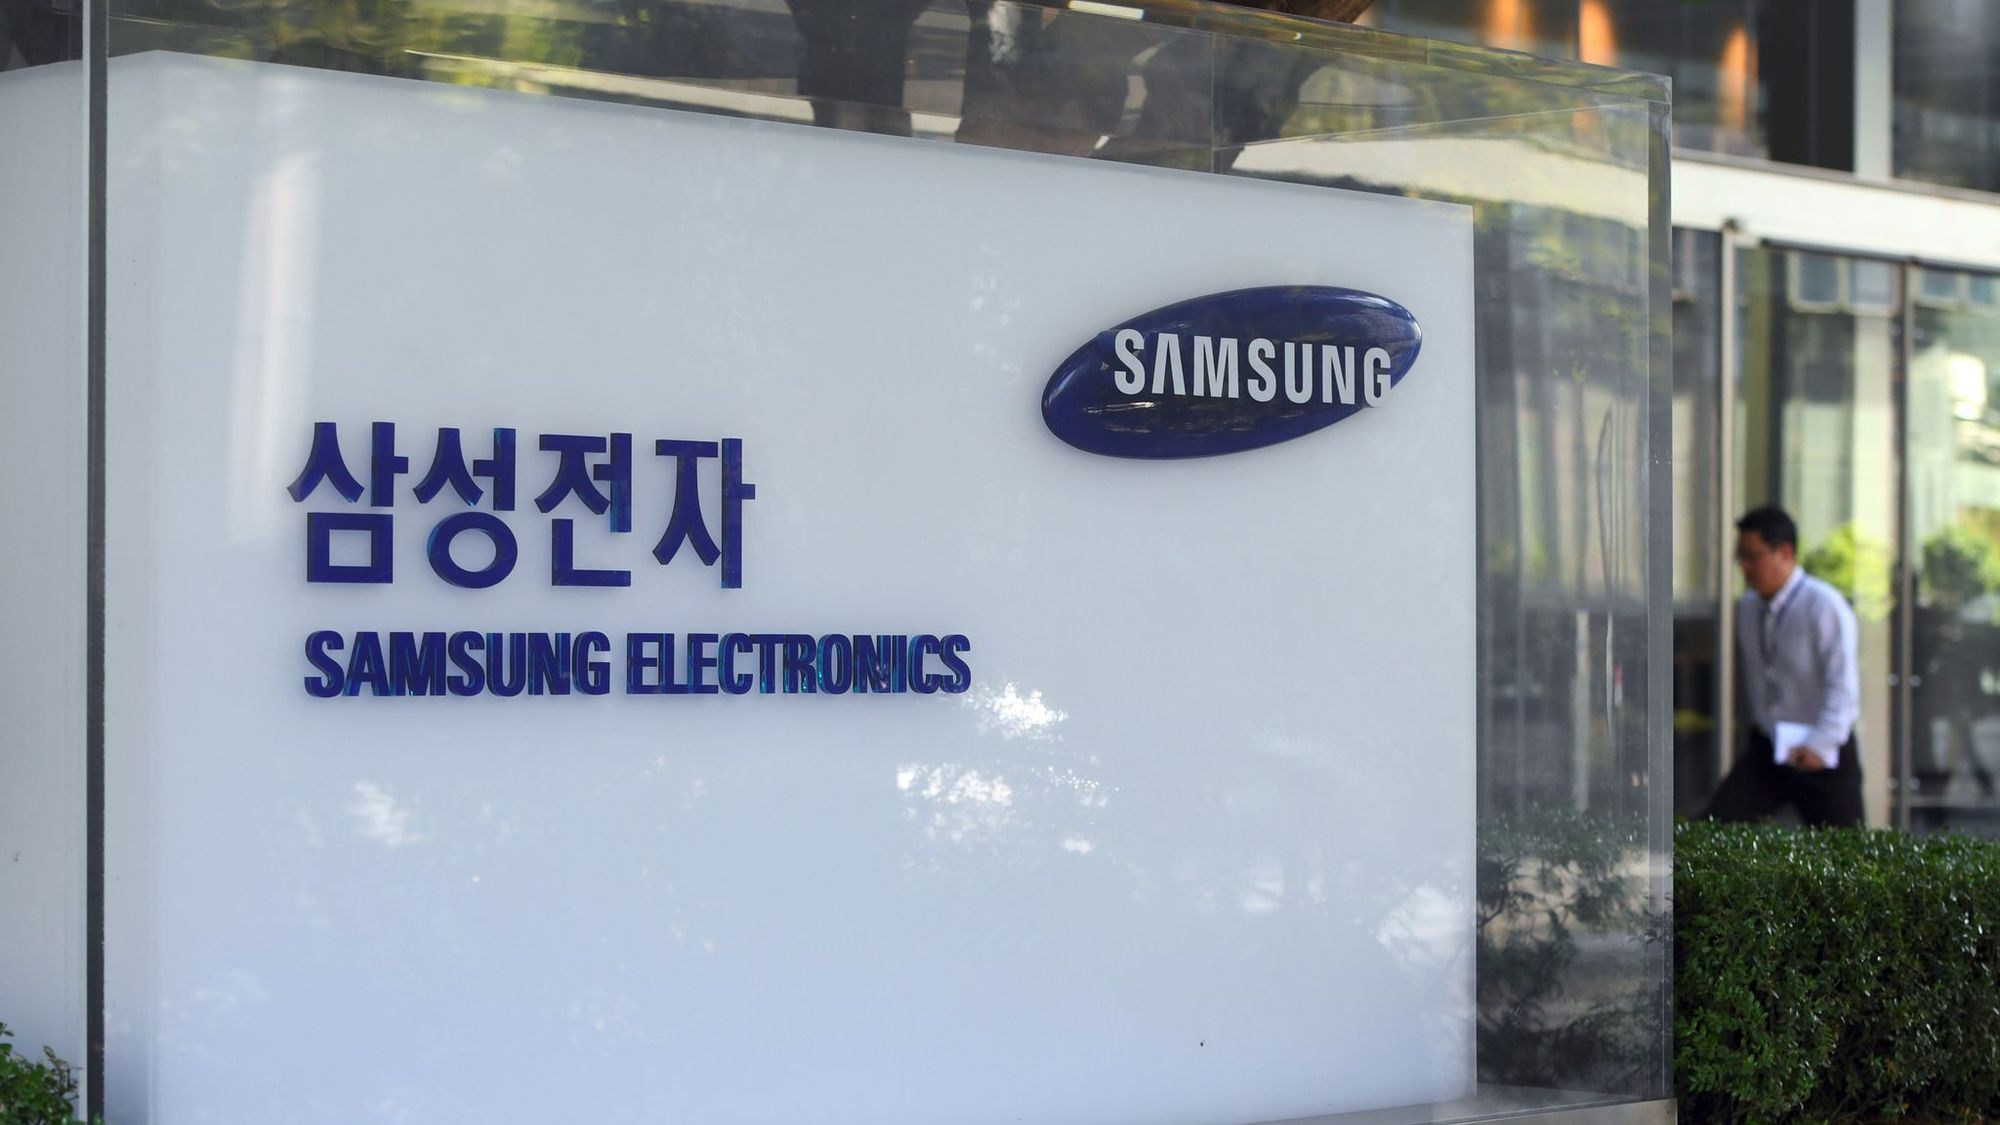 Ооо самсунг электроникс. Samsung Electronics. Кружка самсунг Электроникс. Samsung Electronics co., Ltd s.Korea стол подкатной мрт. Samsung Electronics co Ltd очки.